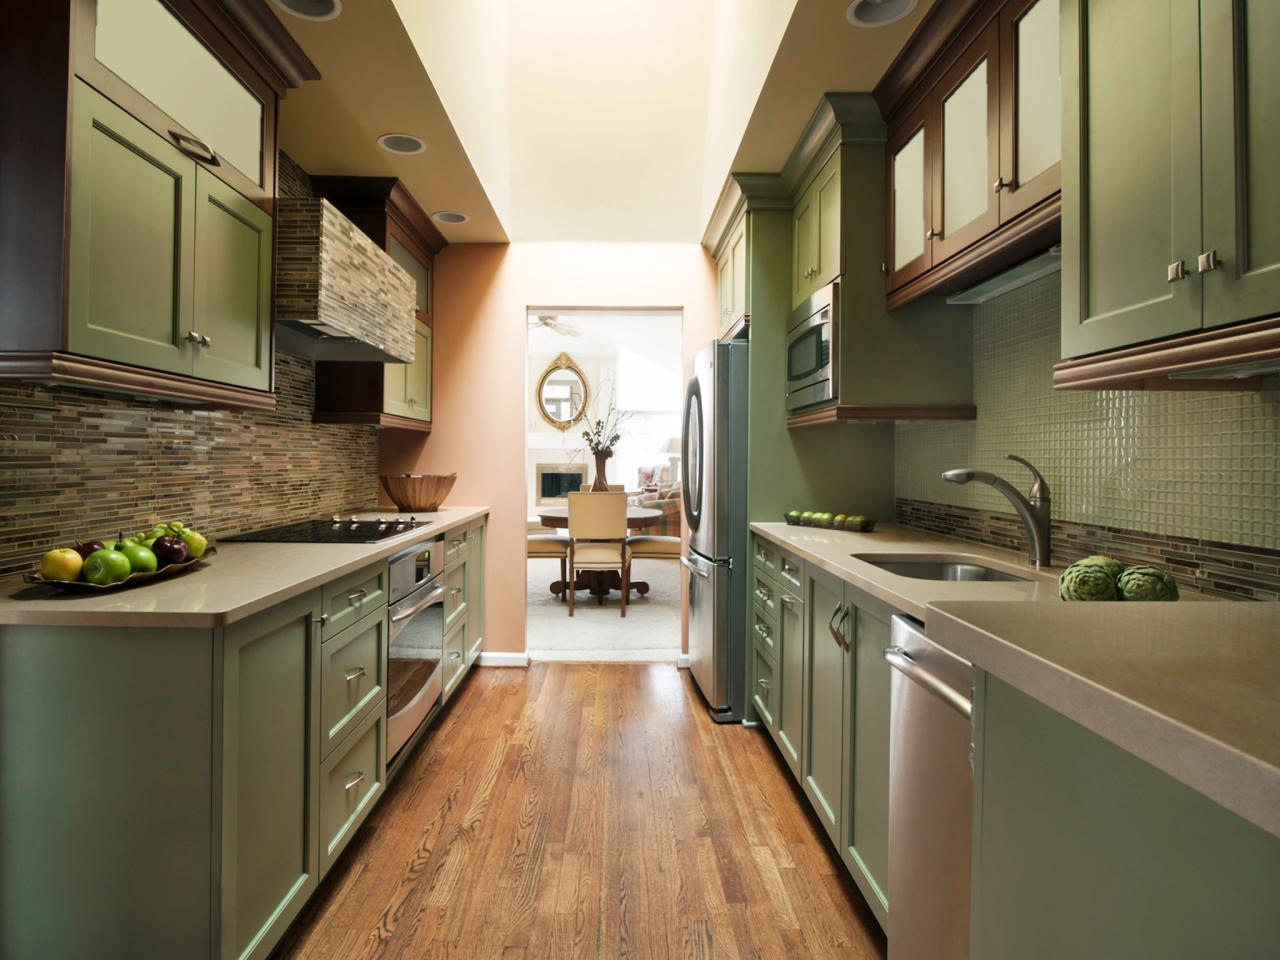 layout tiny galley kitchen design